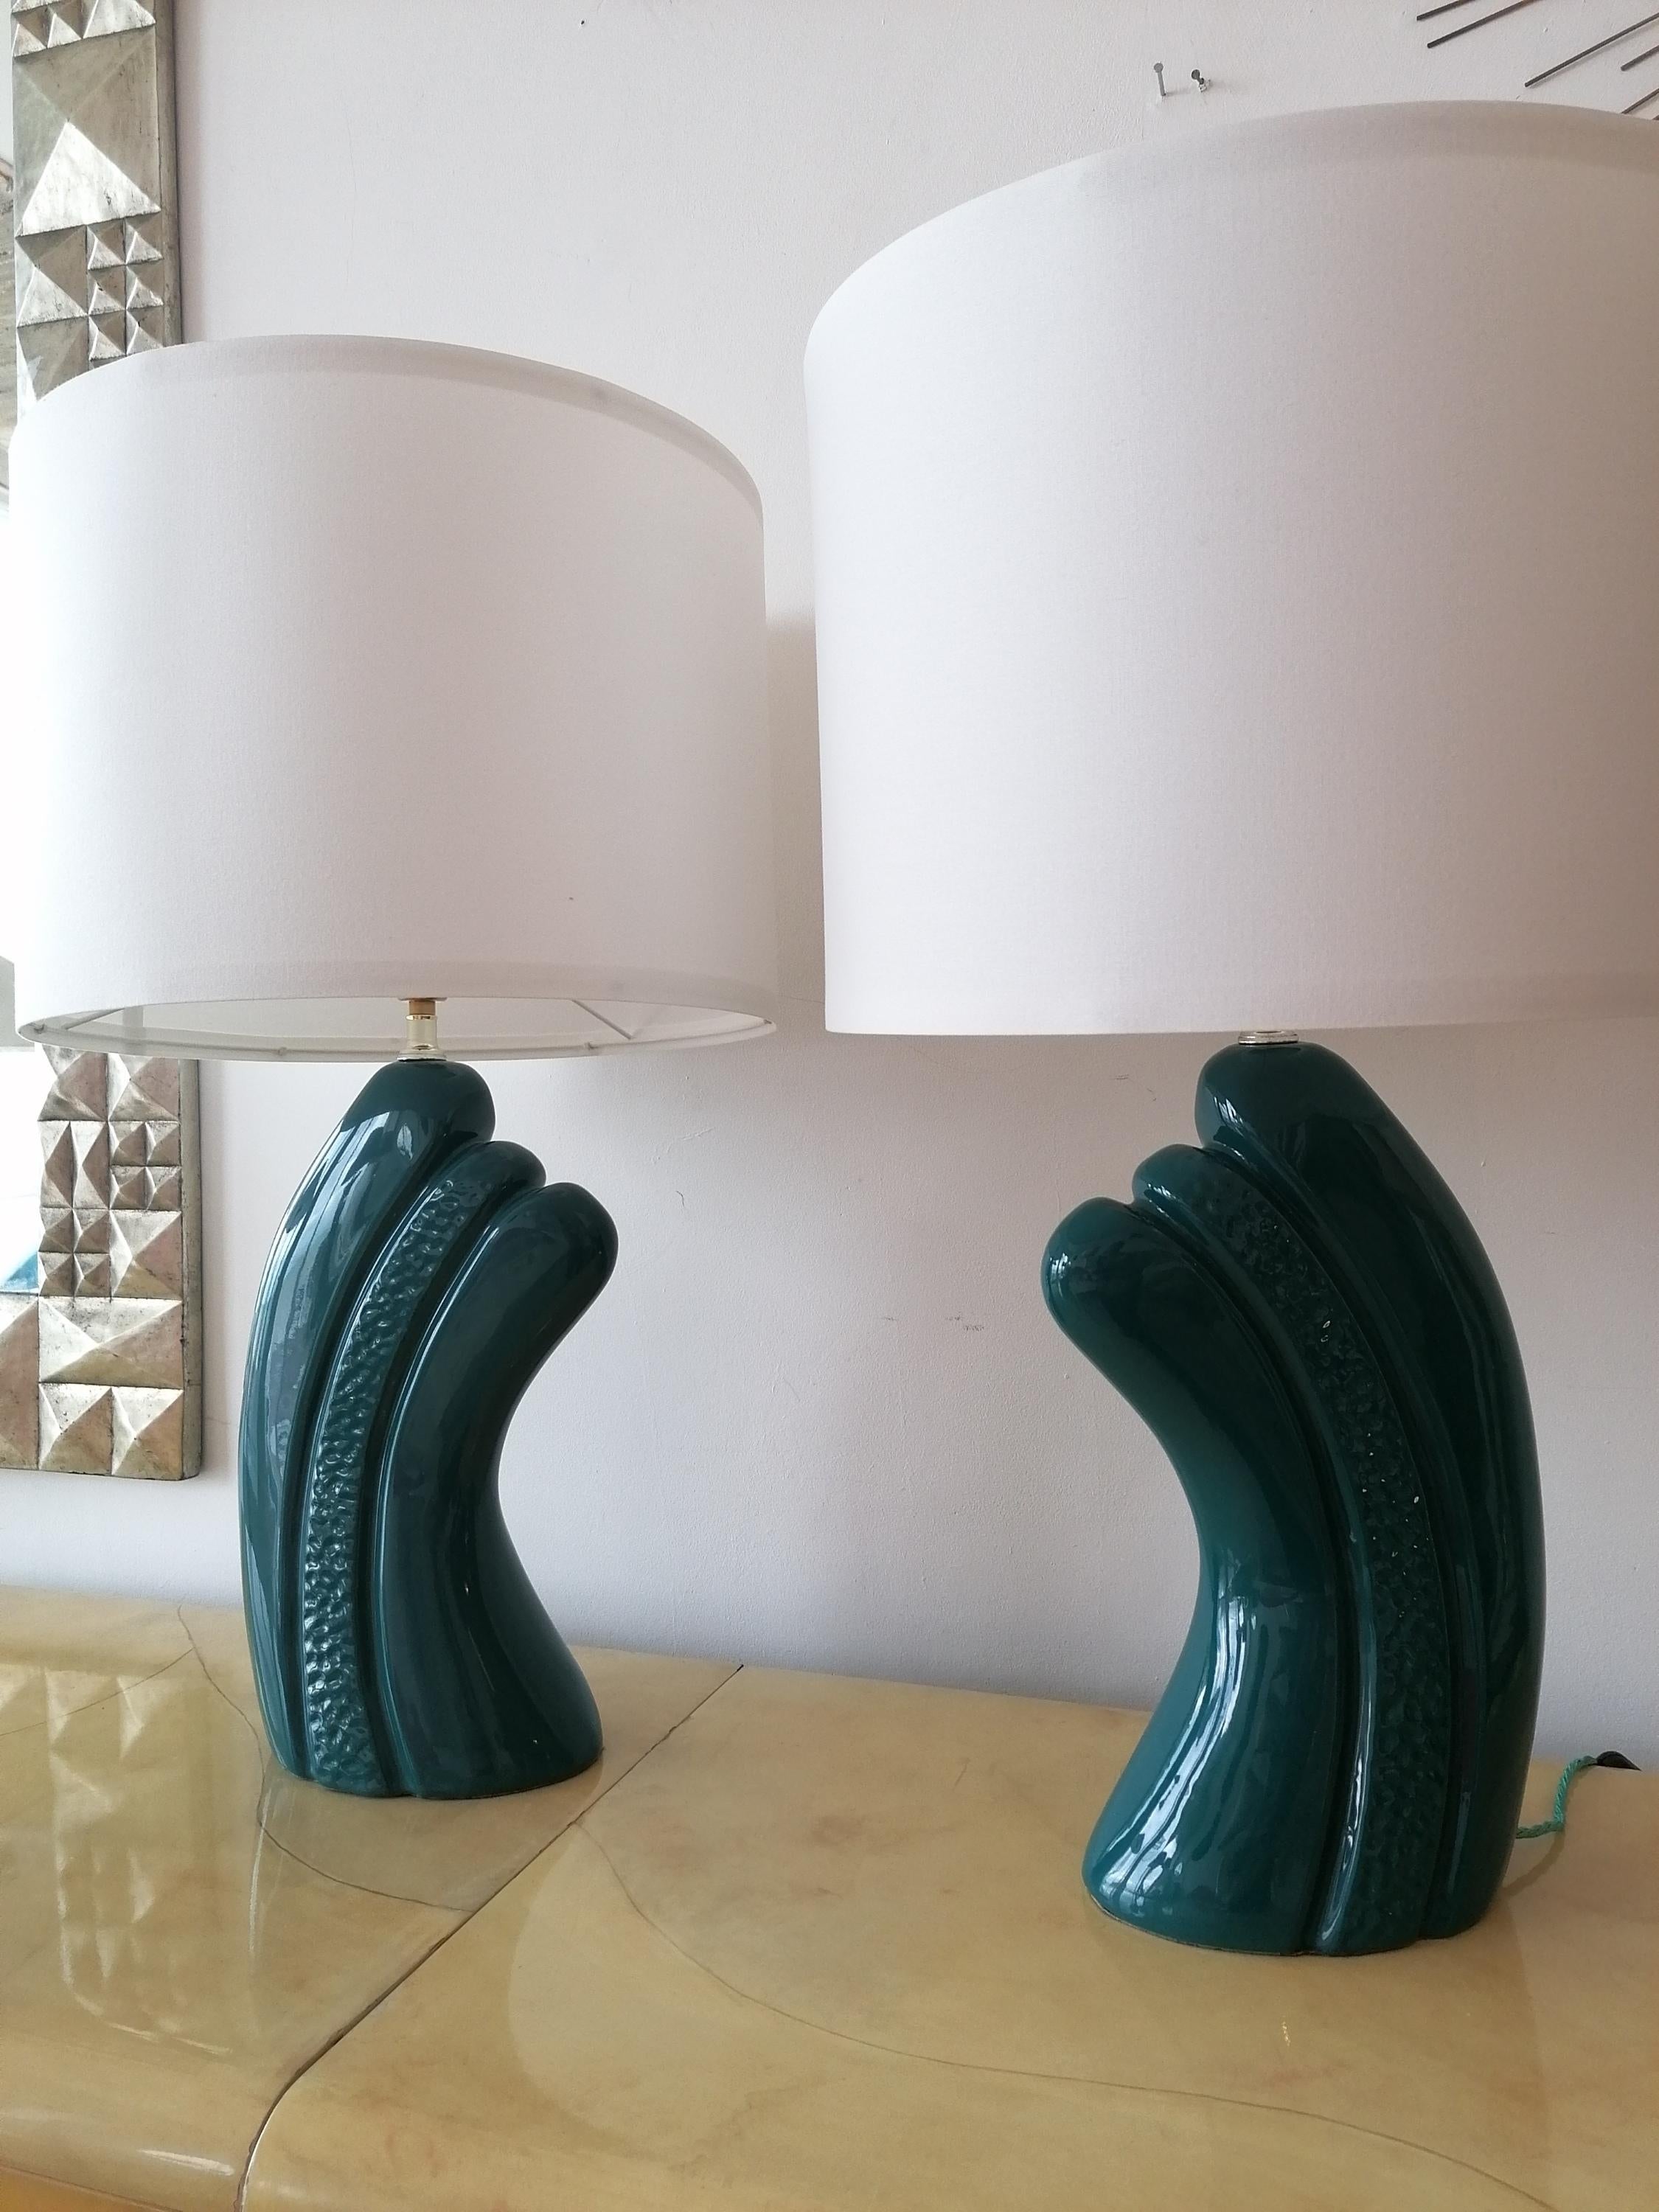 Pair of Dark, Intense Blue / Green Ceramic Lamps, USA 1980s Art Deco Revival For Sale 1